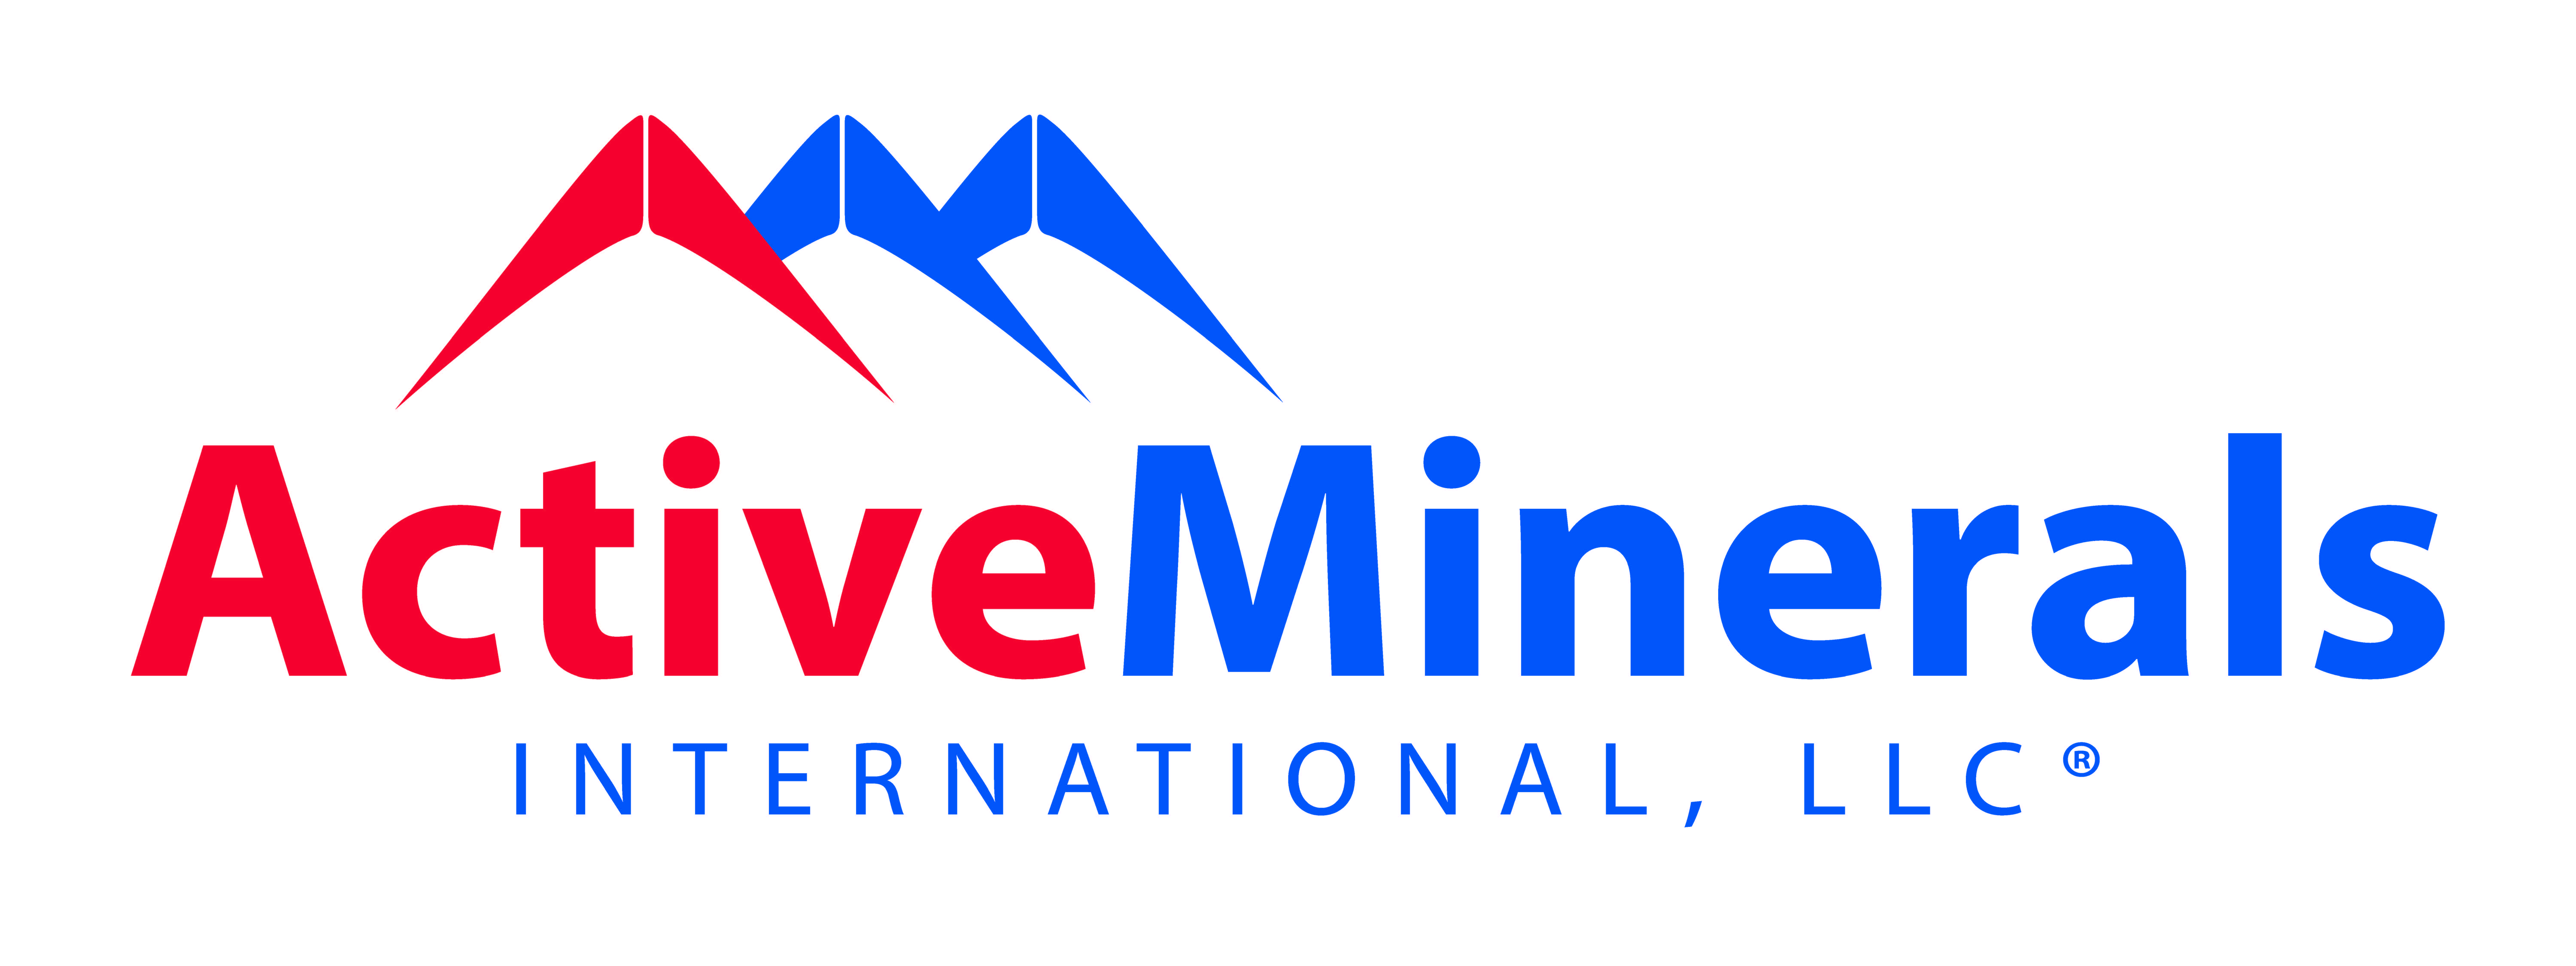 Active Minerals International, LLC_logo